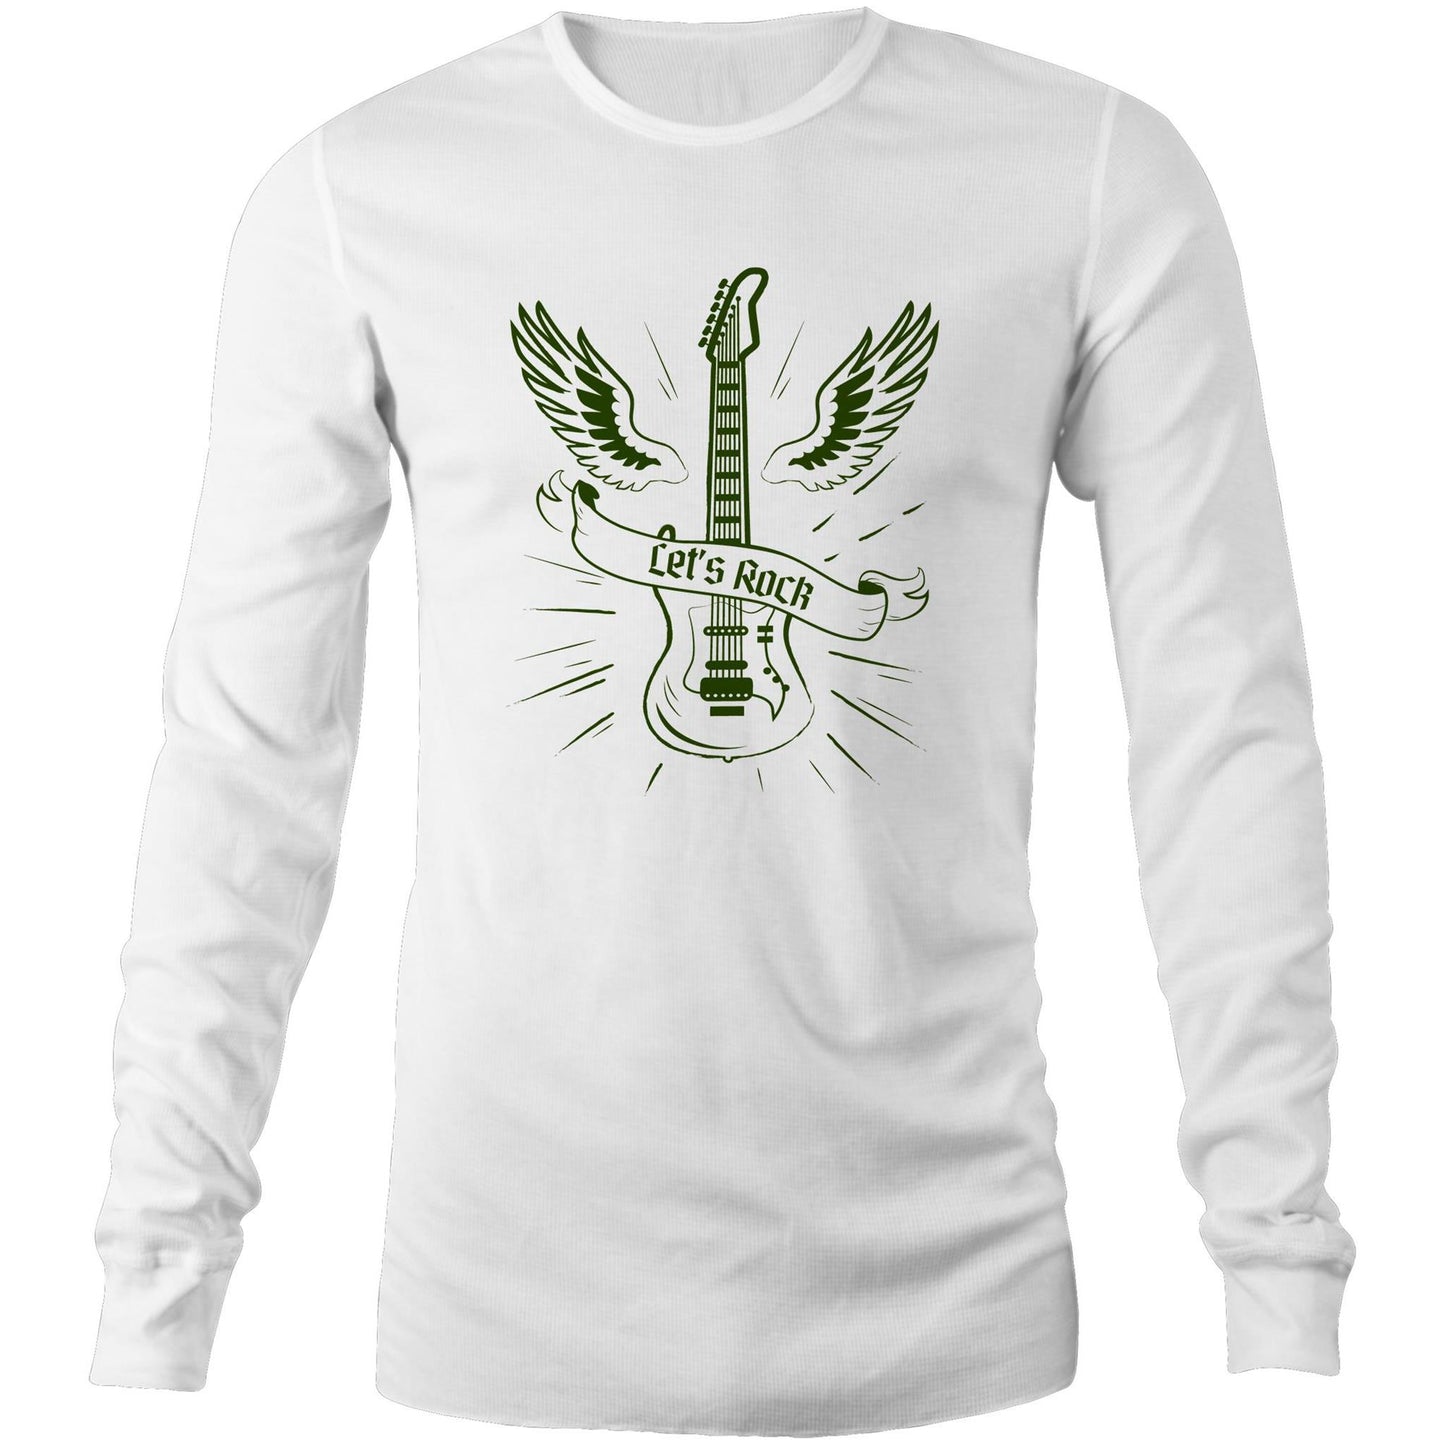 Let's Rock - Long Sleeve T-Shirt White Unisex Long Sleeve T-shirt Music